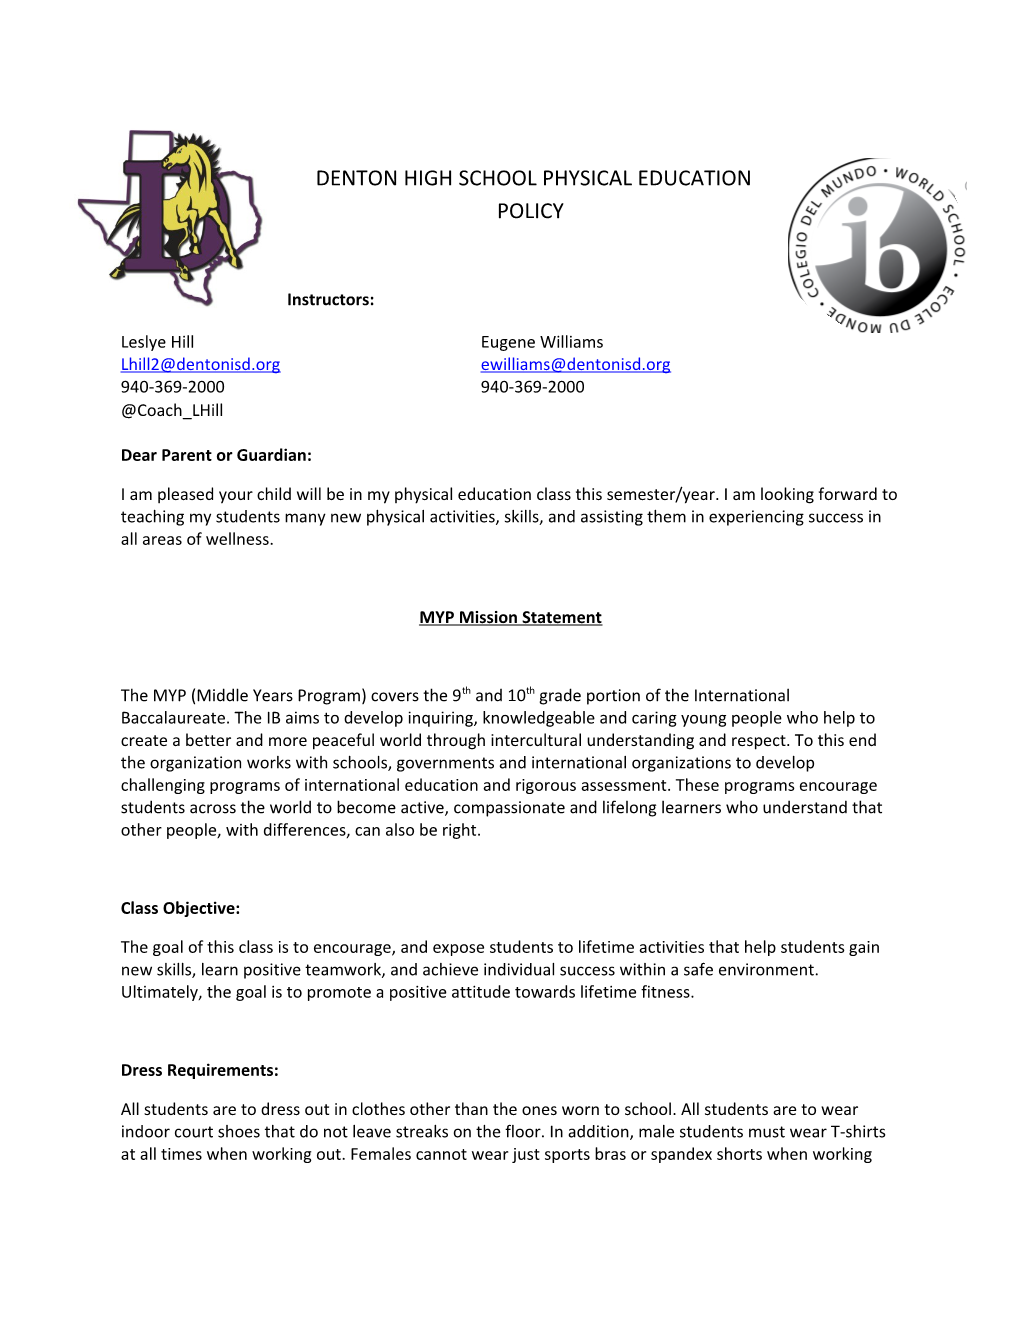 Denton High School Physical Education Policy